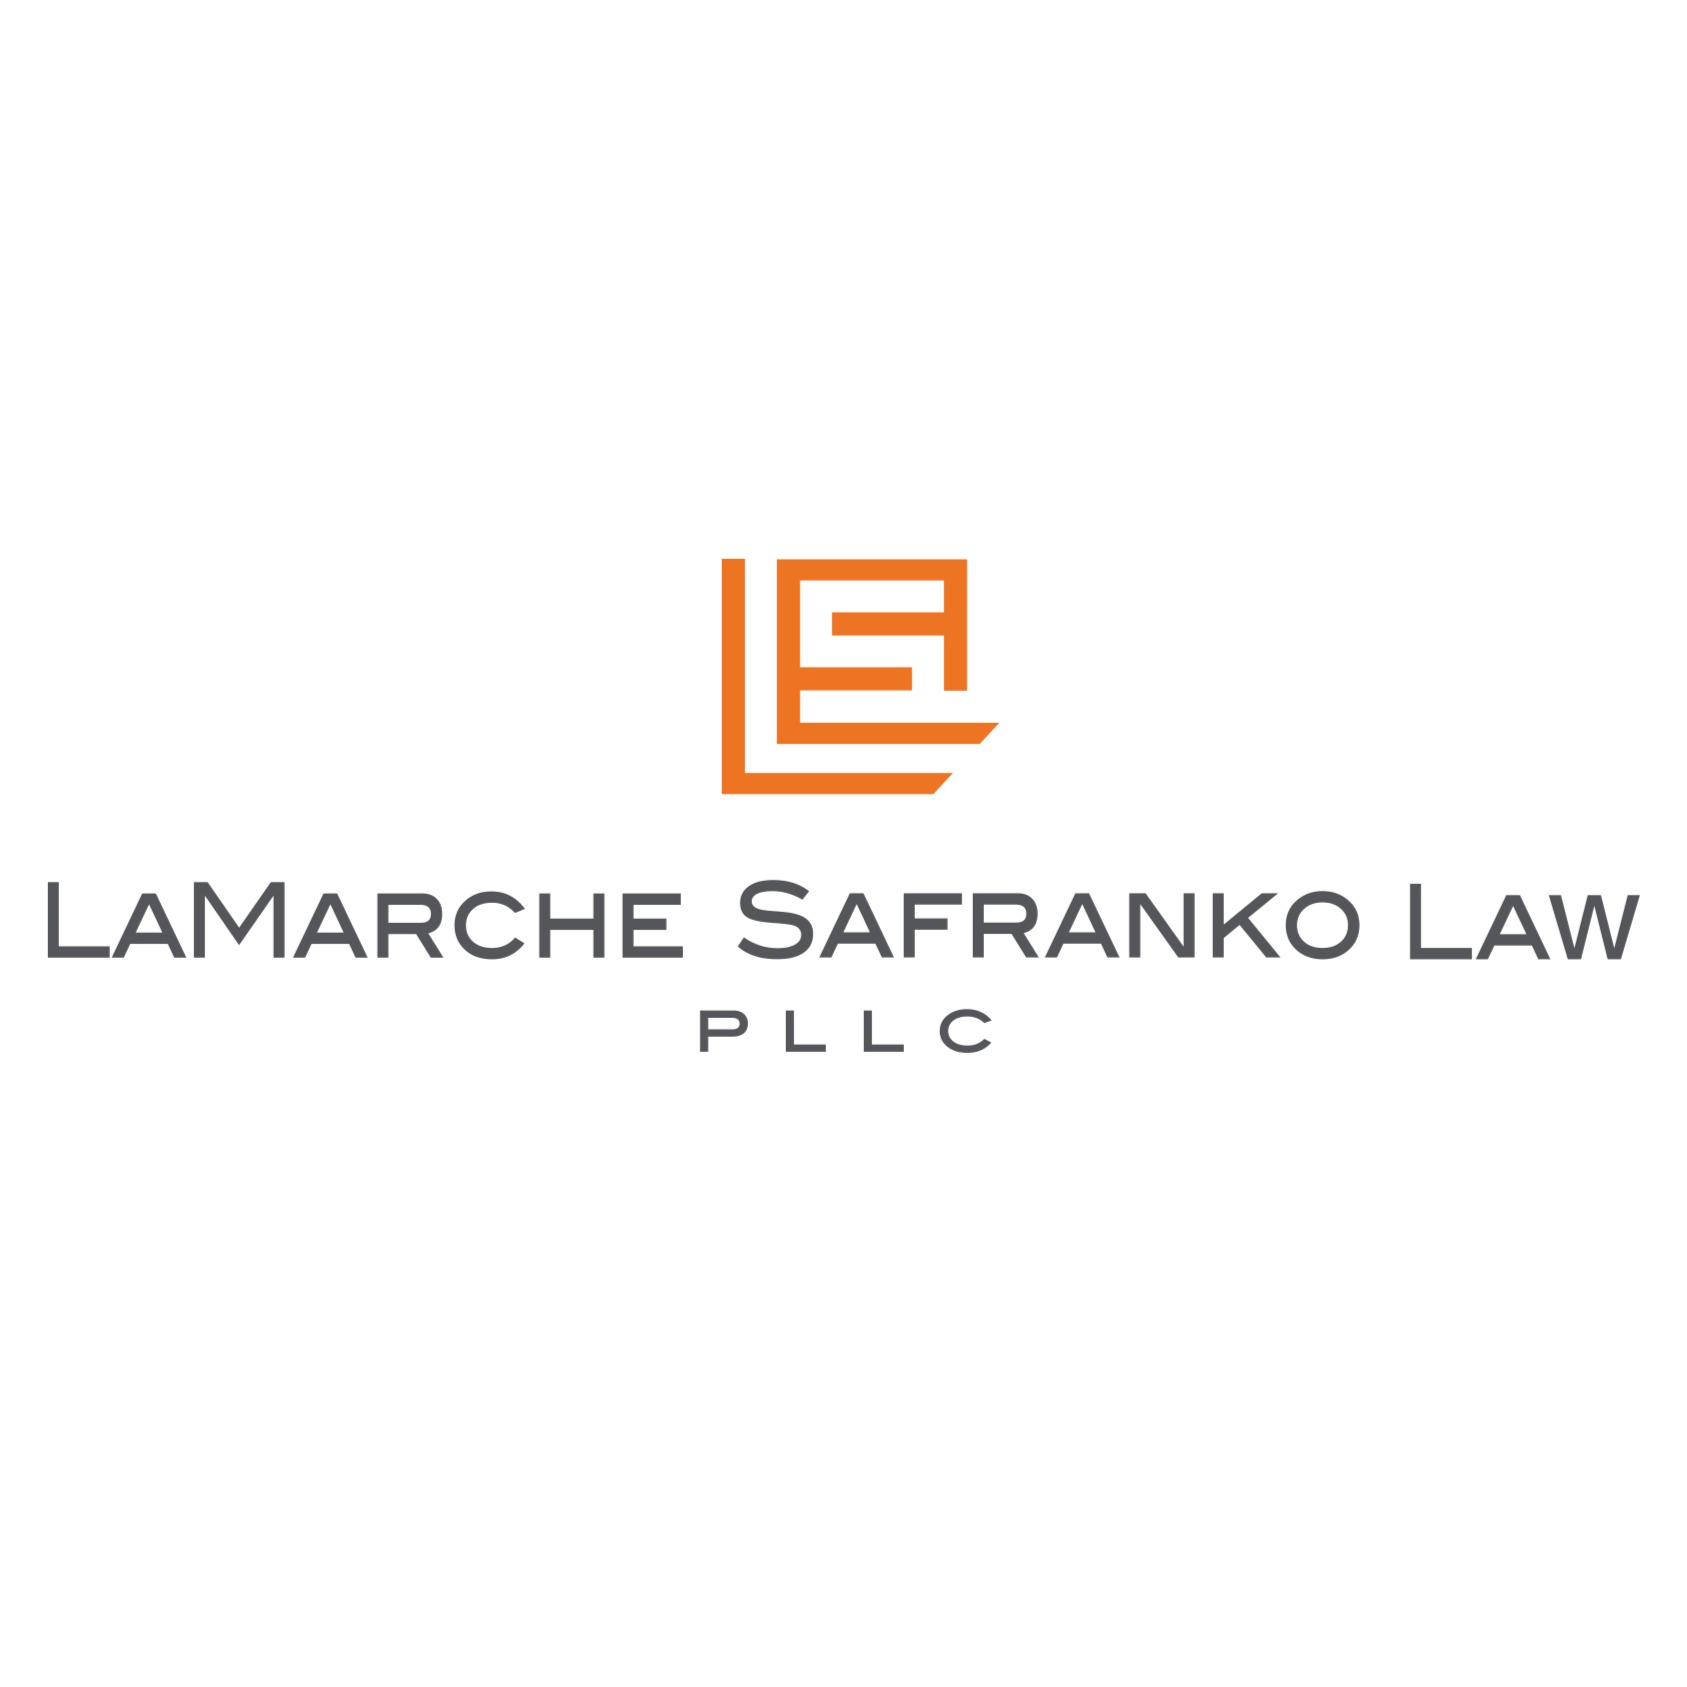 LaMarche Safranko Law PLLC - Cohoes, NY 12047 - (518)982-0770 | ShowMeLocal.com